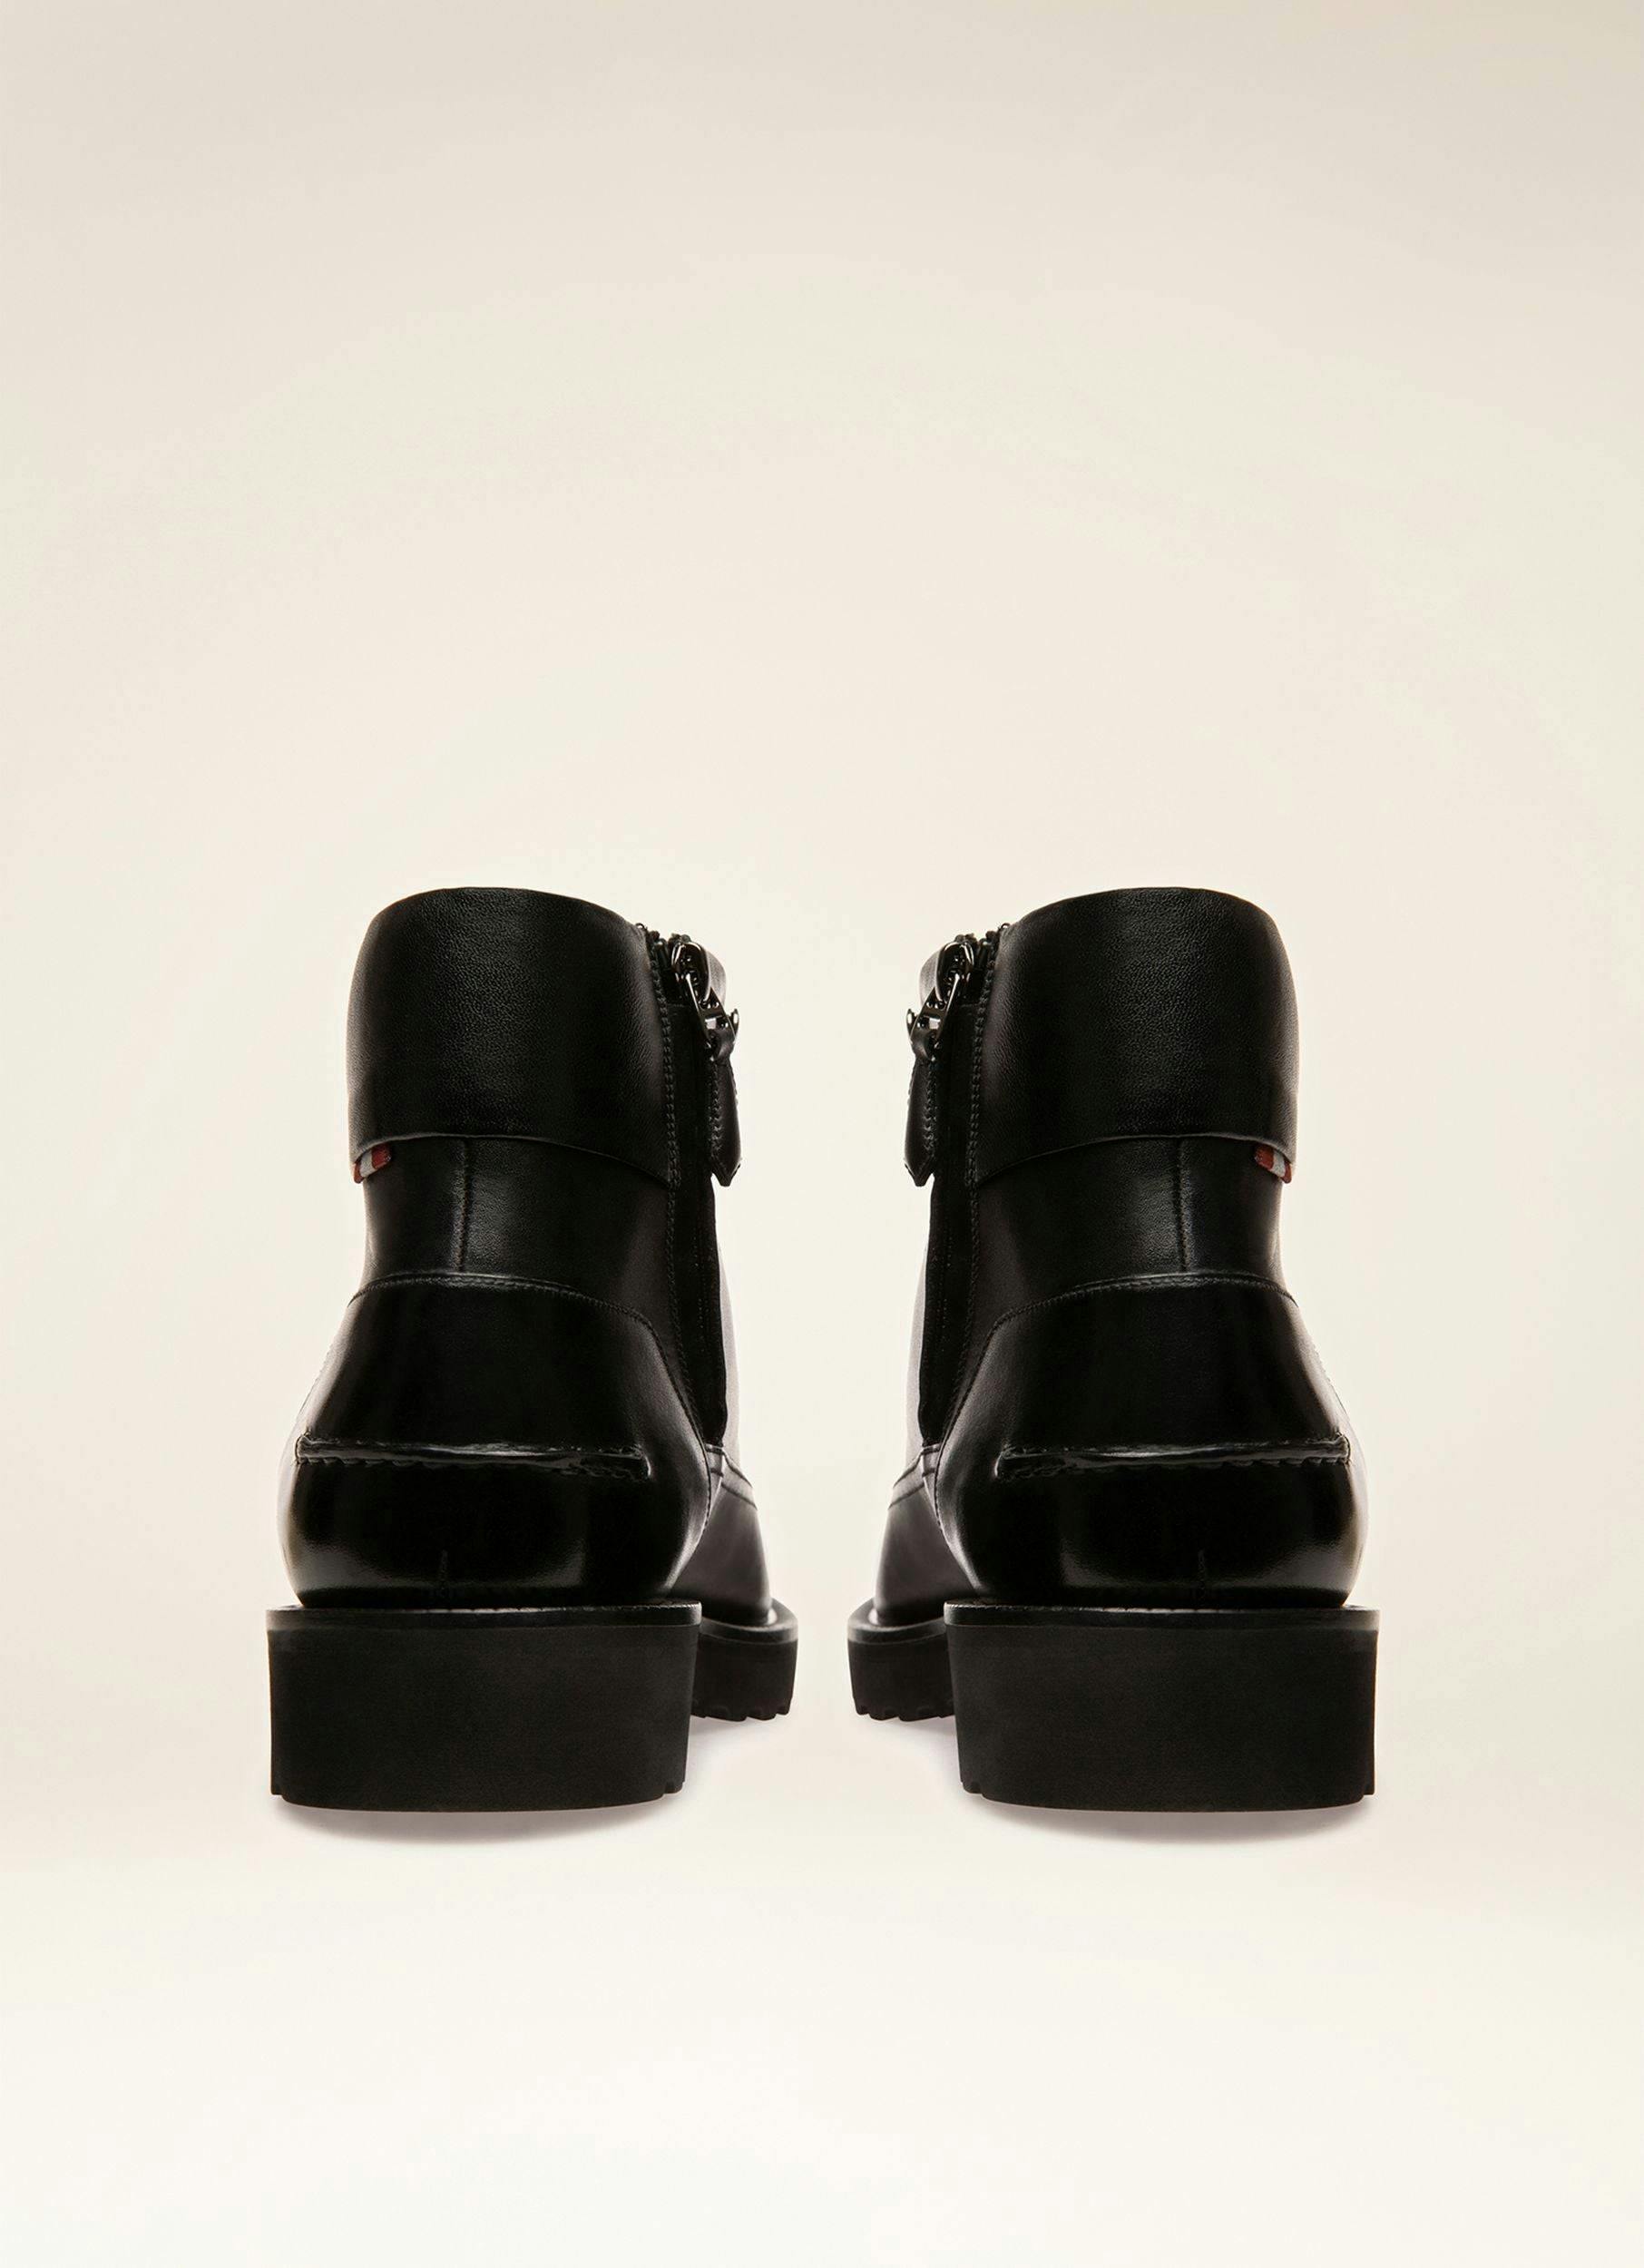 NOTTINGHAM Leather Boots In Black - Men's - Bally - 03